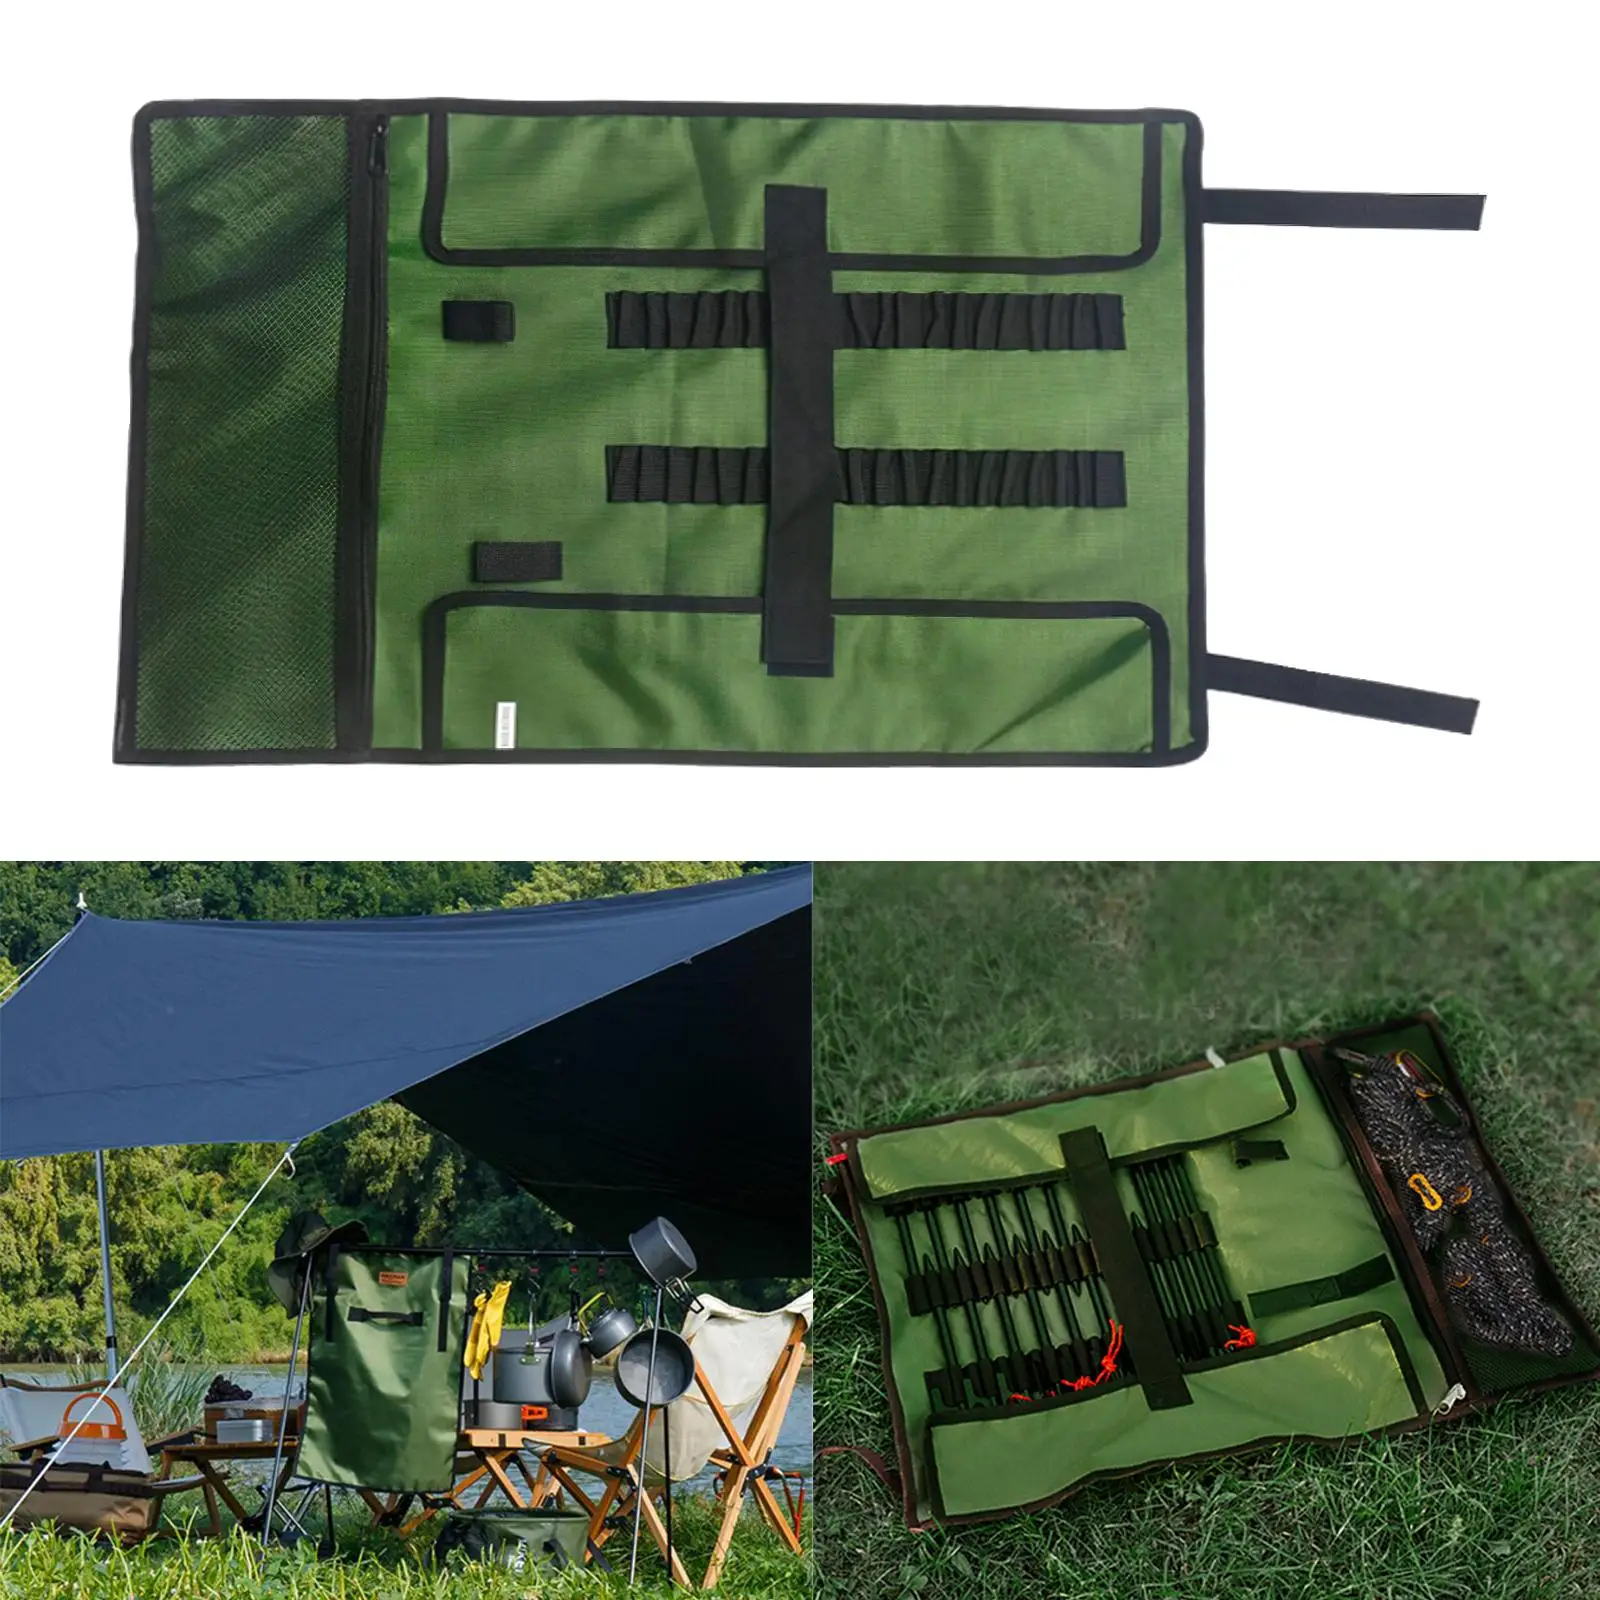 Oxford Cloth Camping Nails Storage Bag Toolkit Organization for Hiking